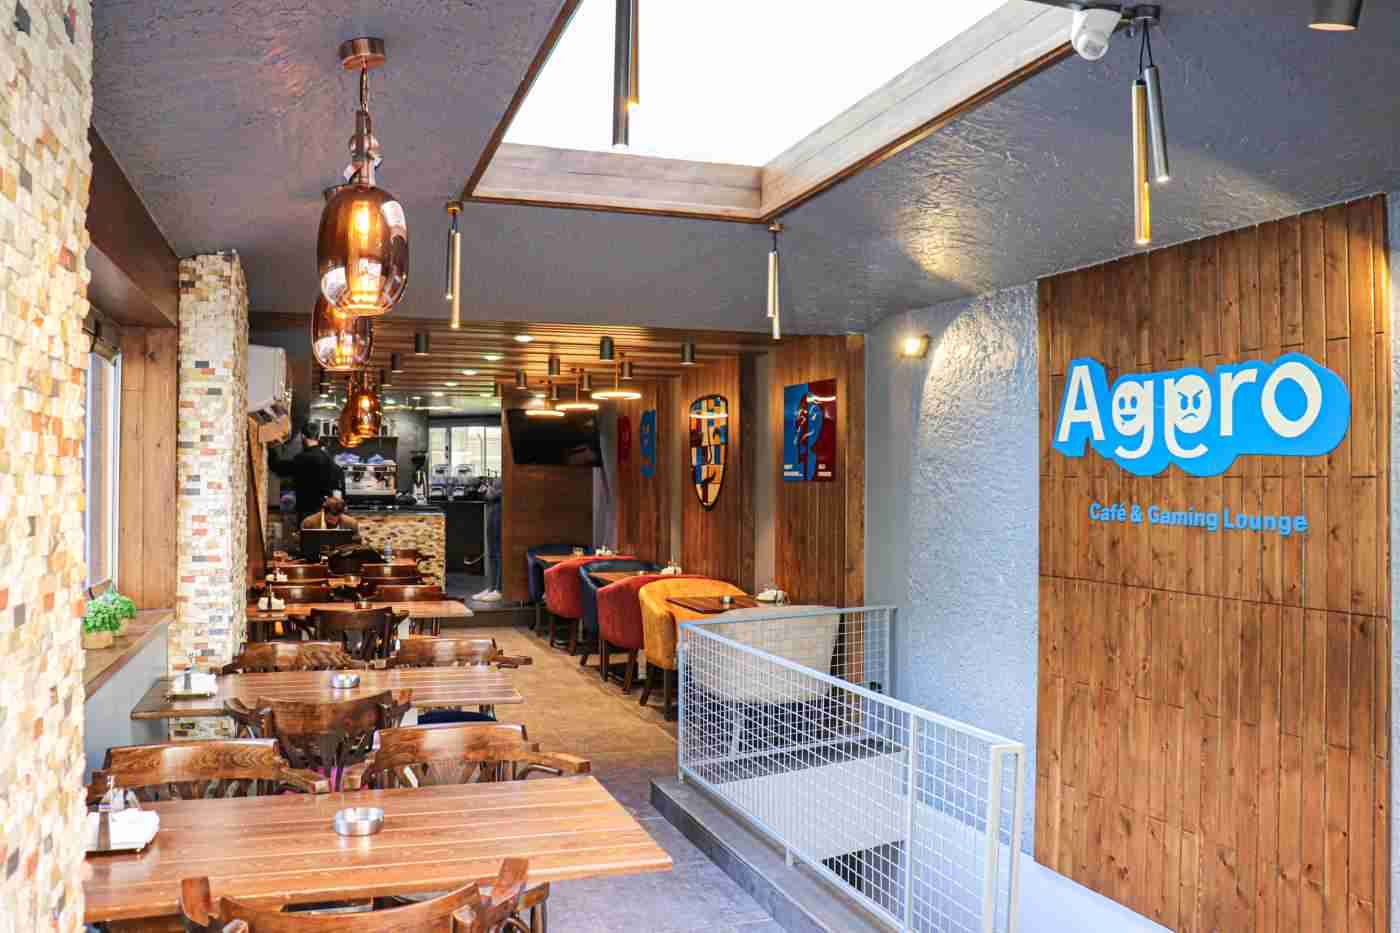 Aggro Cafe & Gaming Lounge